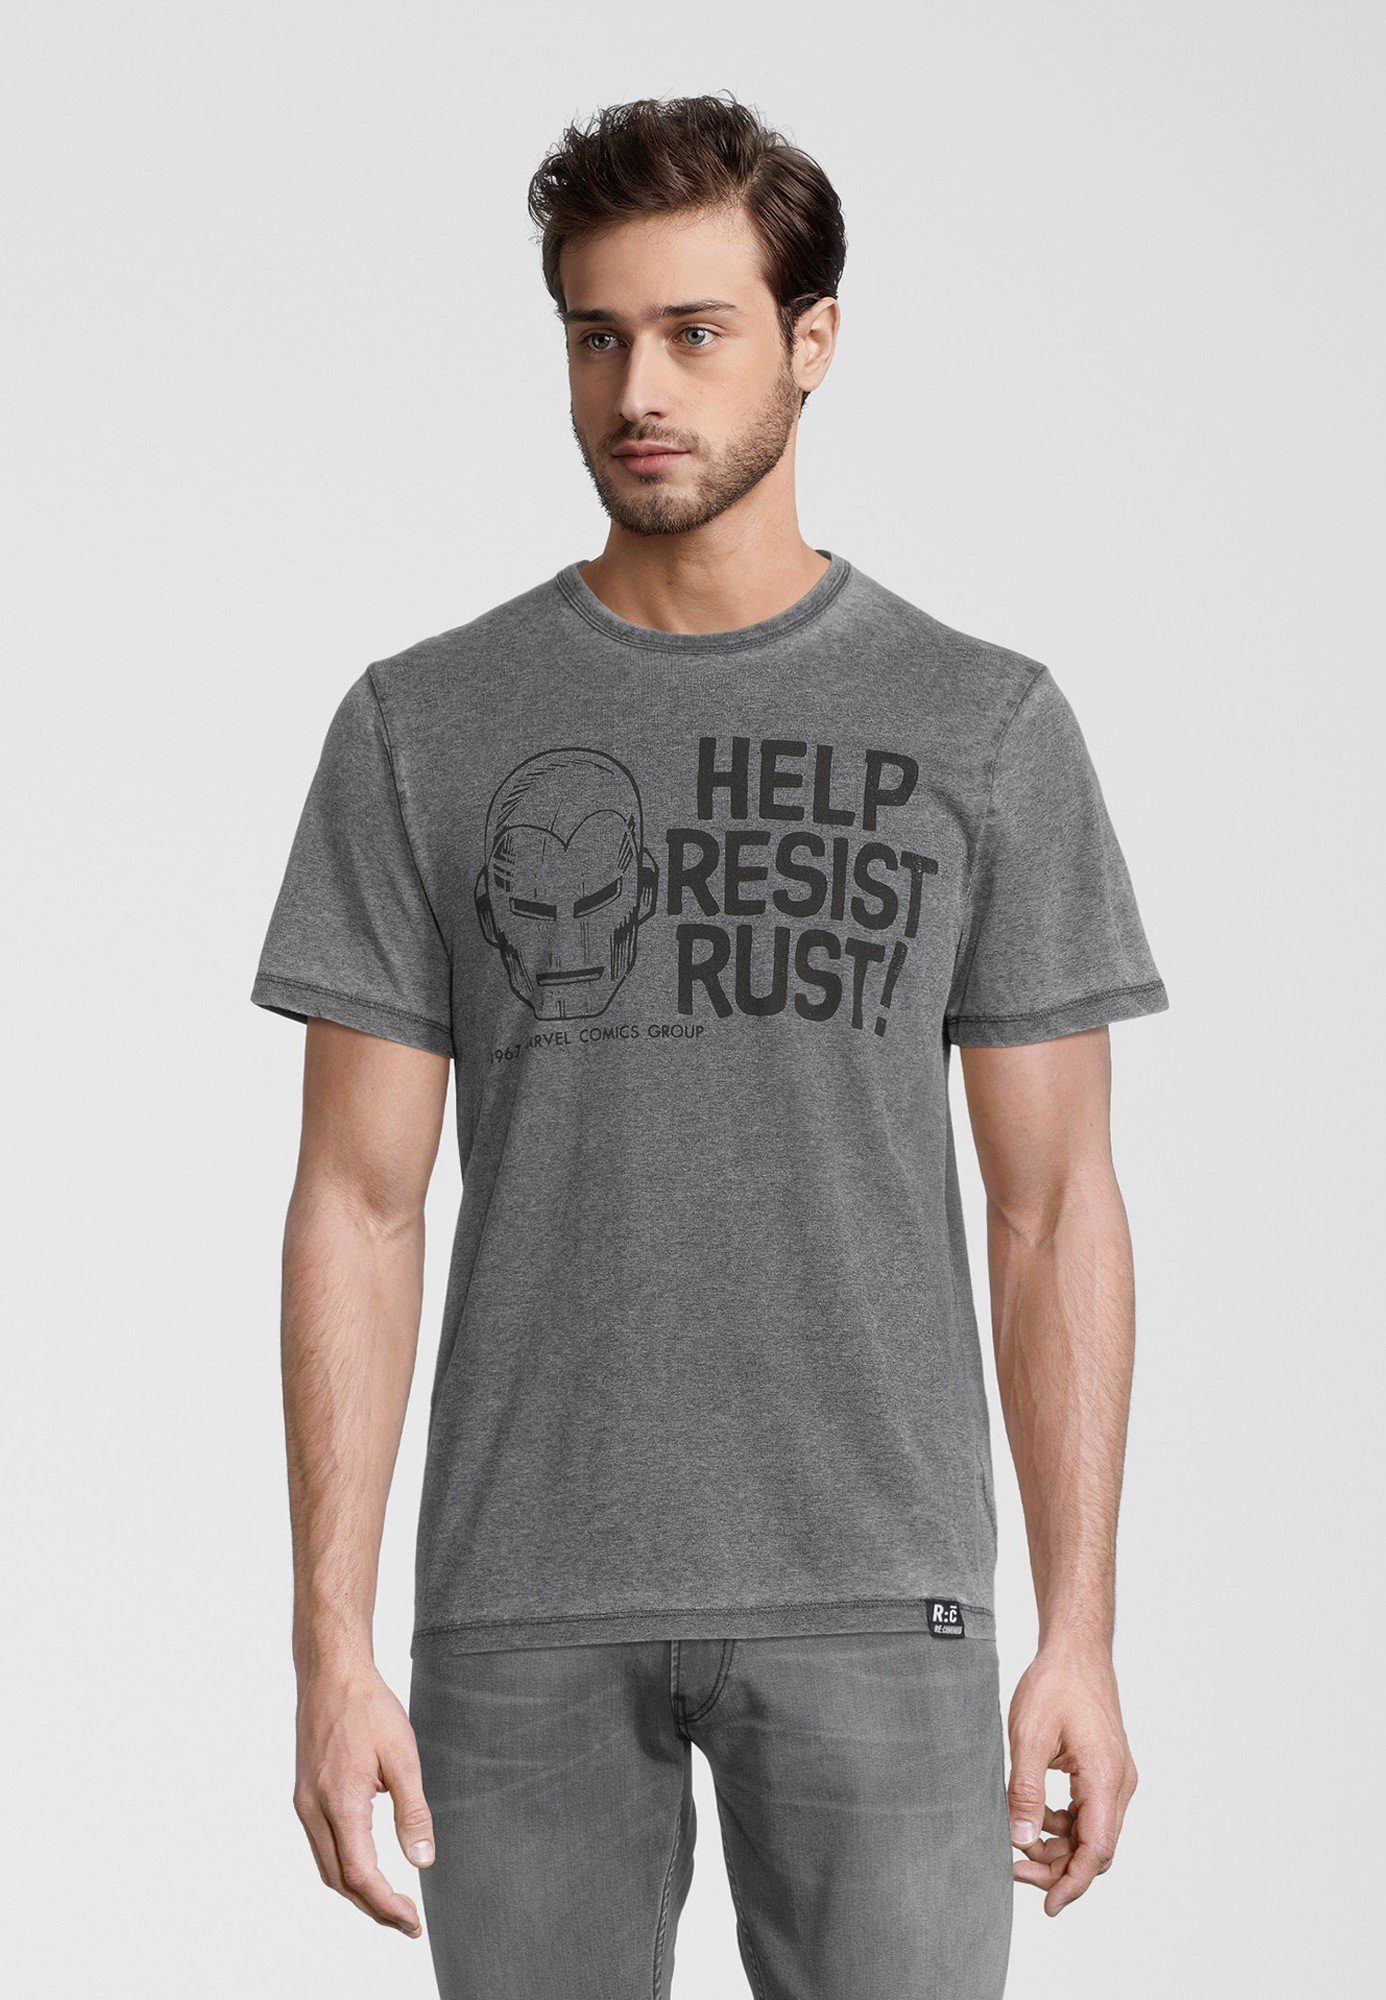 Bio-Baumwolle Resist Charcoal Marvel zertifizierte Recovered Help T-Shirt Rust GOTS